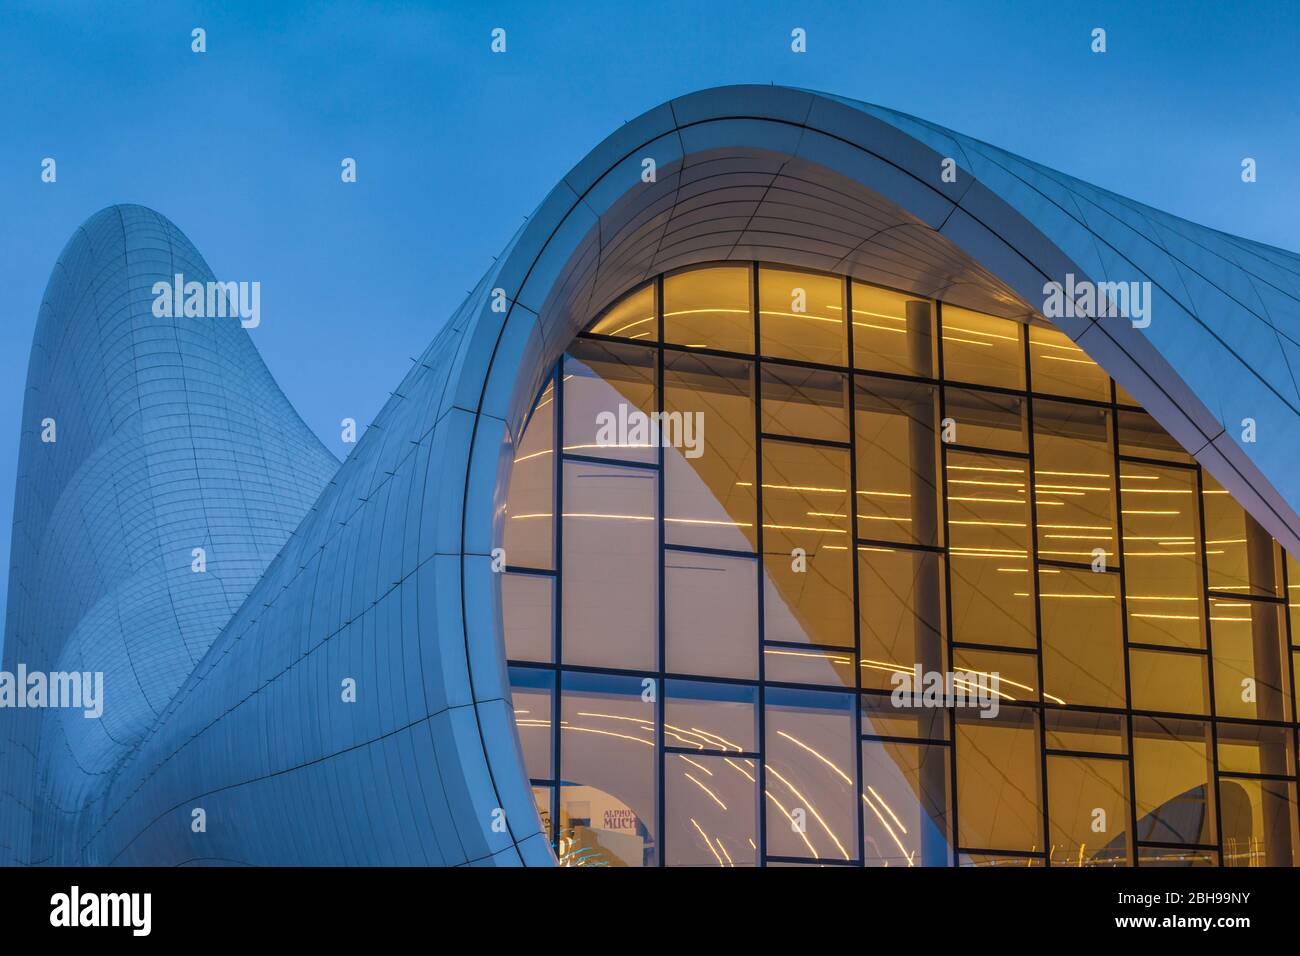 Azerbaijan, Baku, Heydar Aliyev Cultural Center, building designed by Zaha Hadid, exterior, dusk Stock Photo